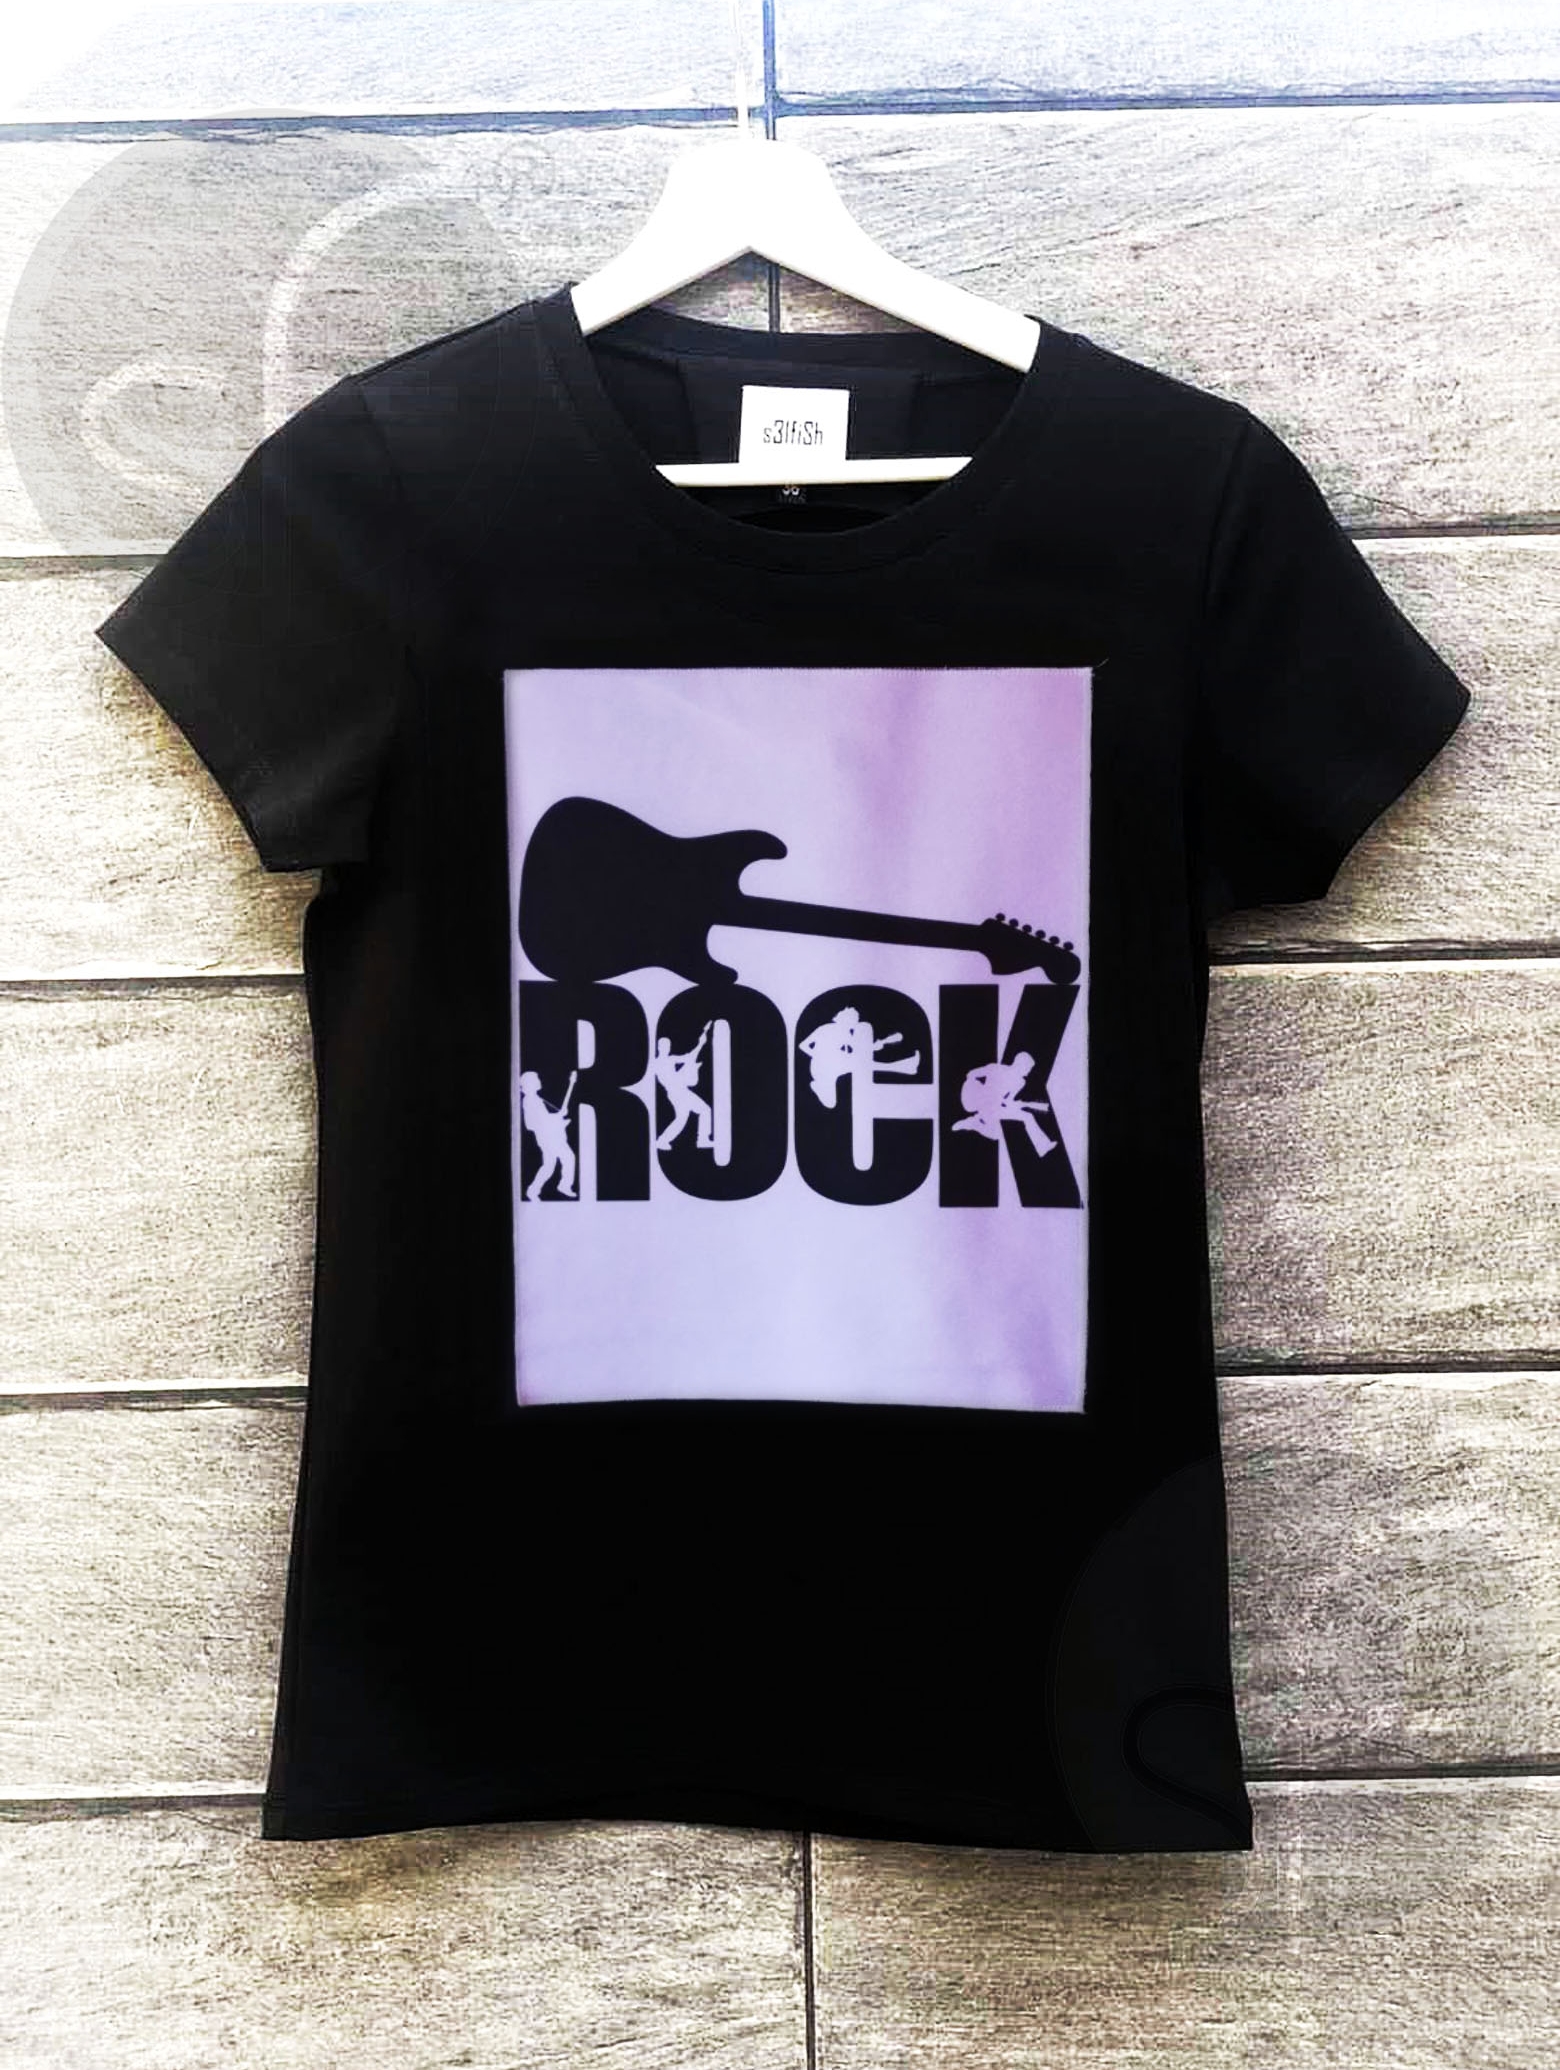 Дамска/Детска Тениска Rock